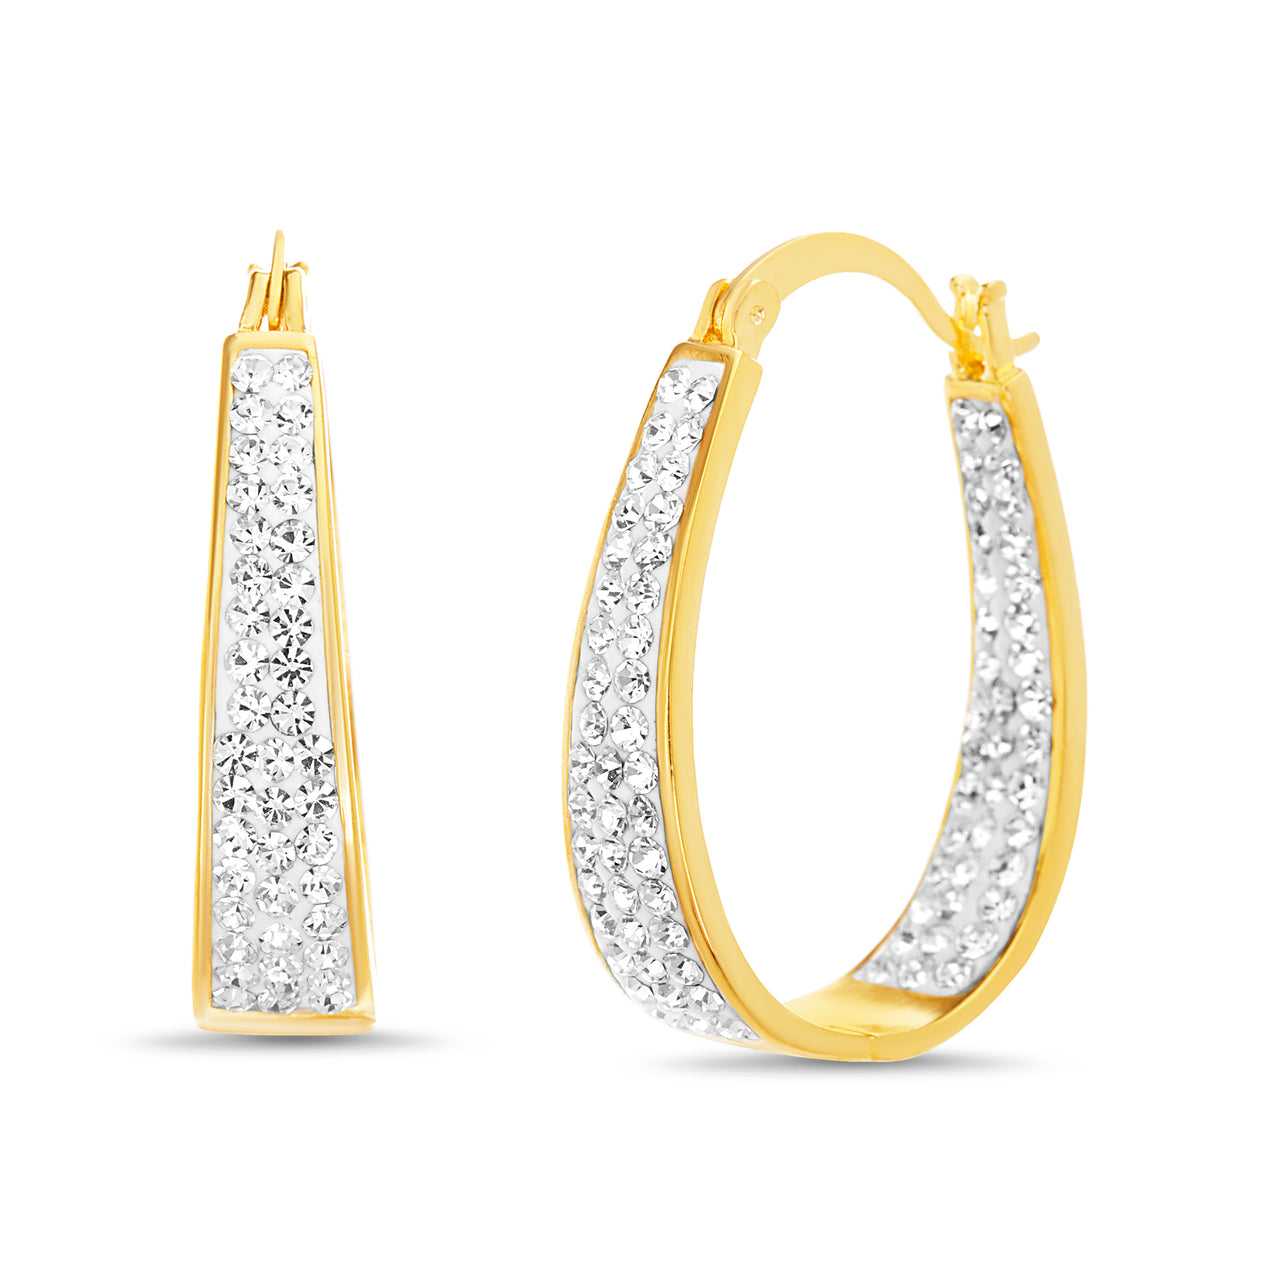 Lesa Michele Crystal Big Hoop Earrings in Yellow Gold Plated Sterling Silver